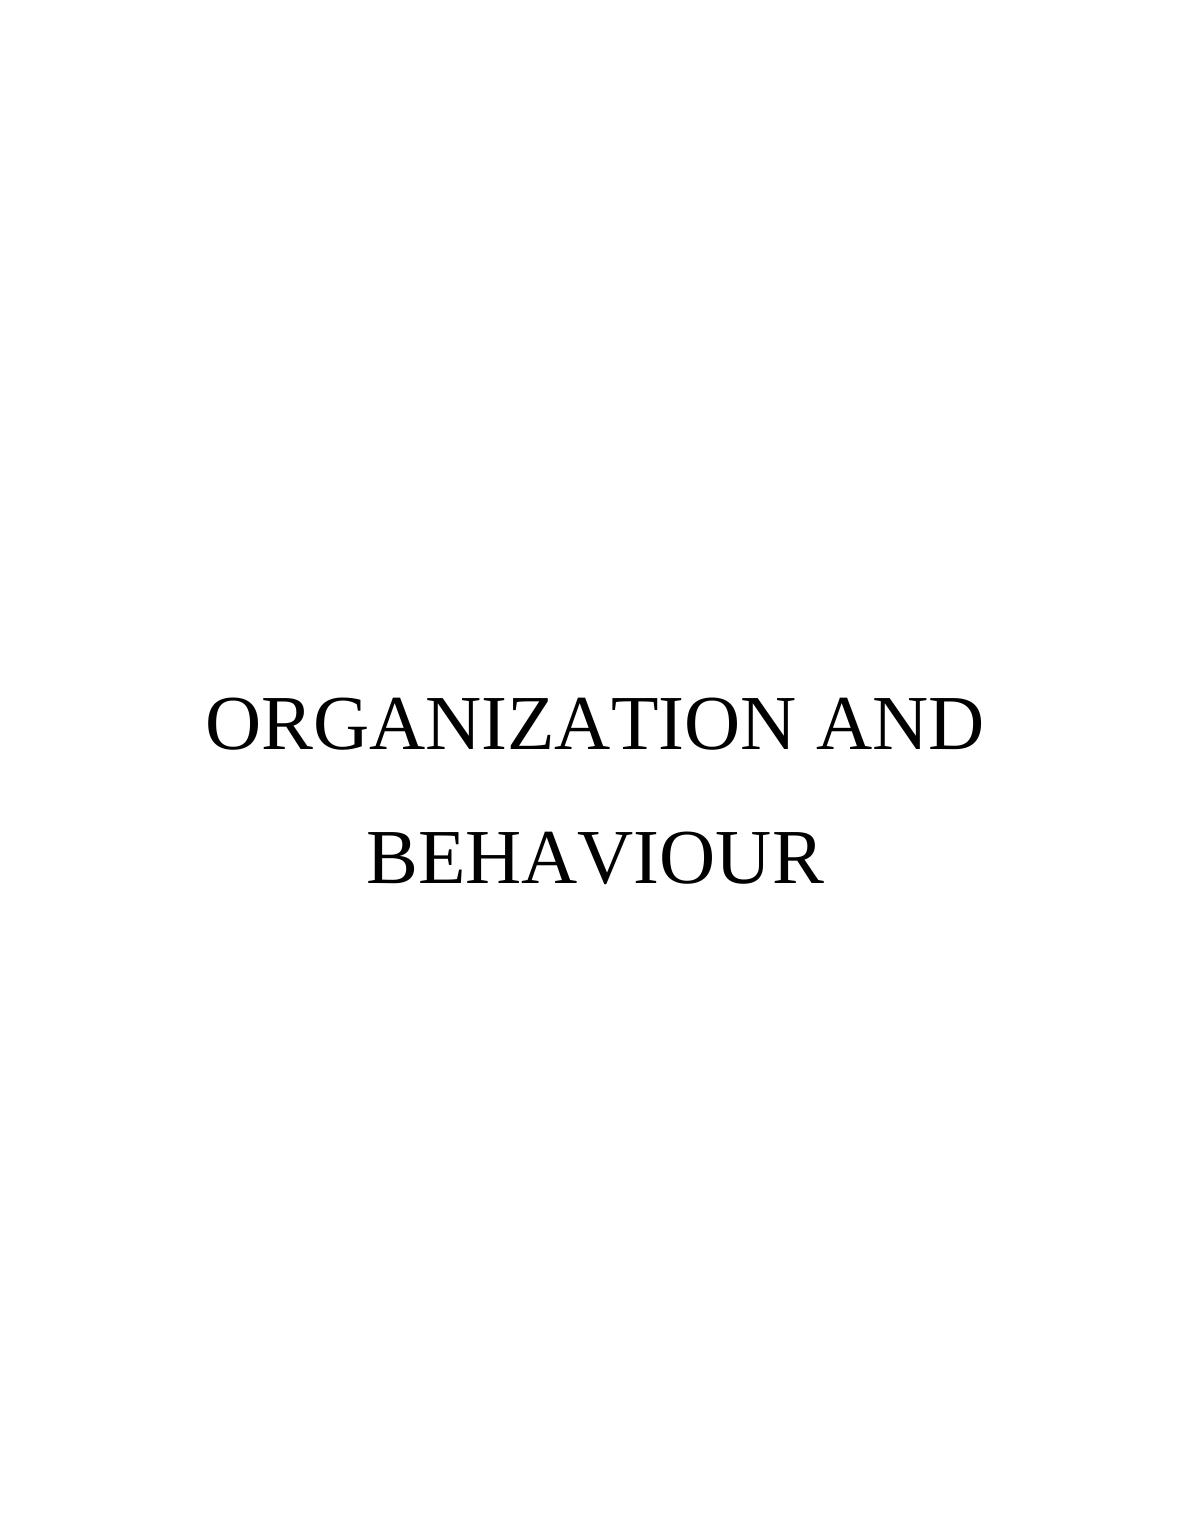 Organizational Behaviour in CAPCO company - Report_1